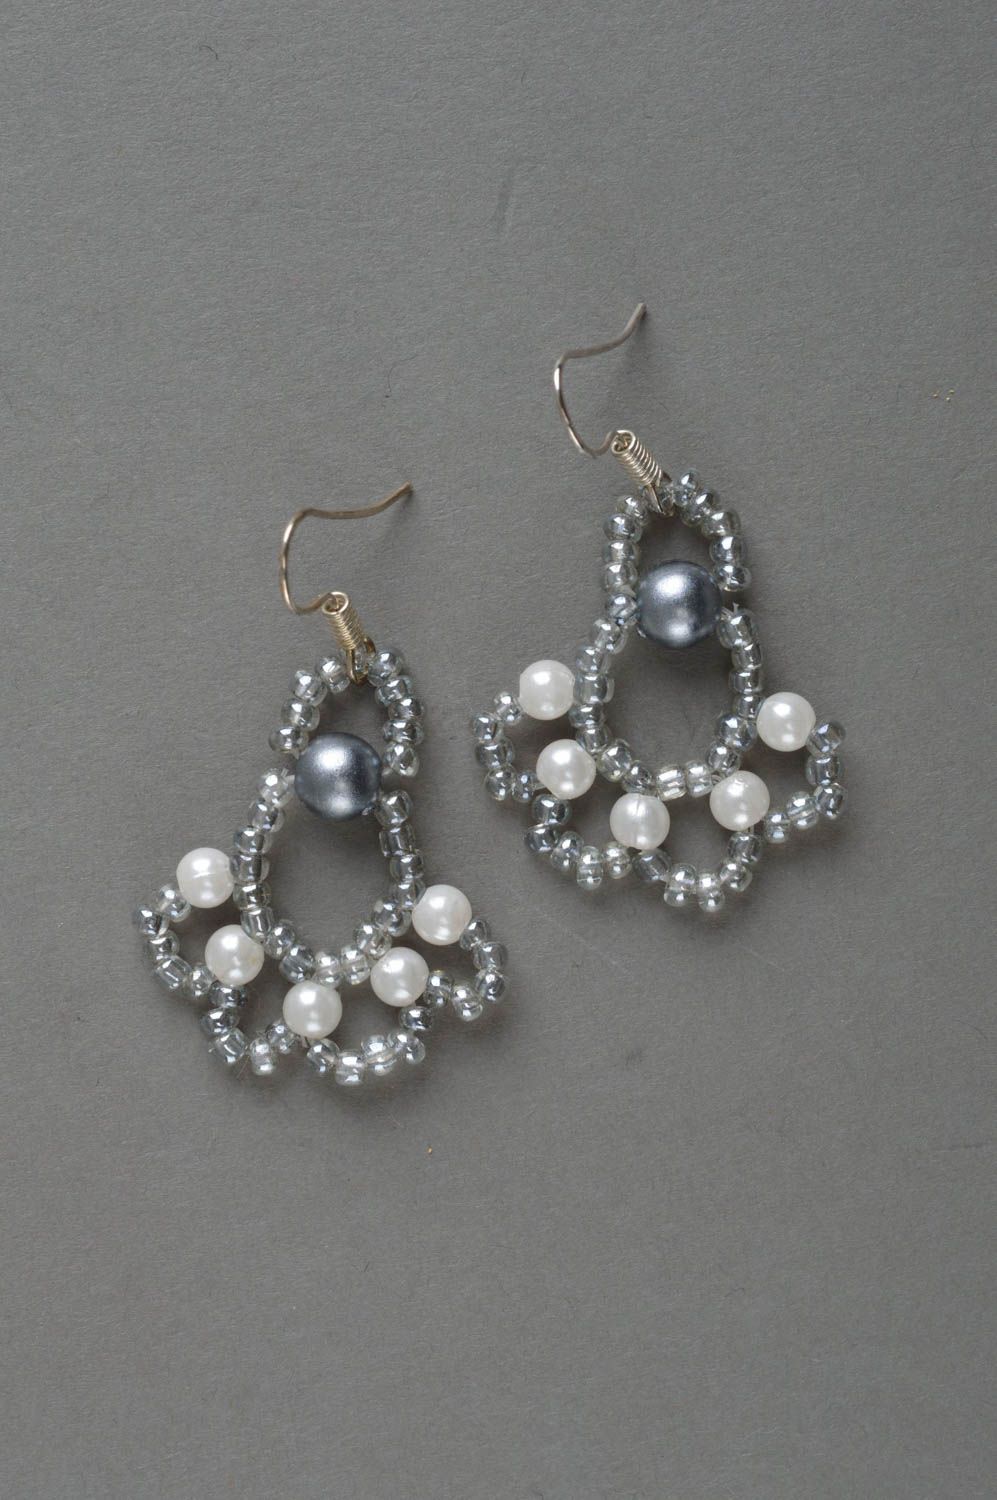 Massive handmade beaded earrings evening jewelry designer accessories for gift photo 2